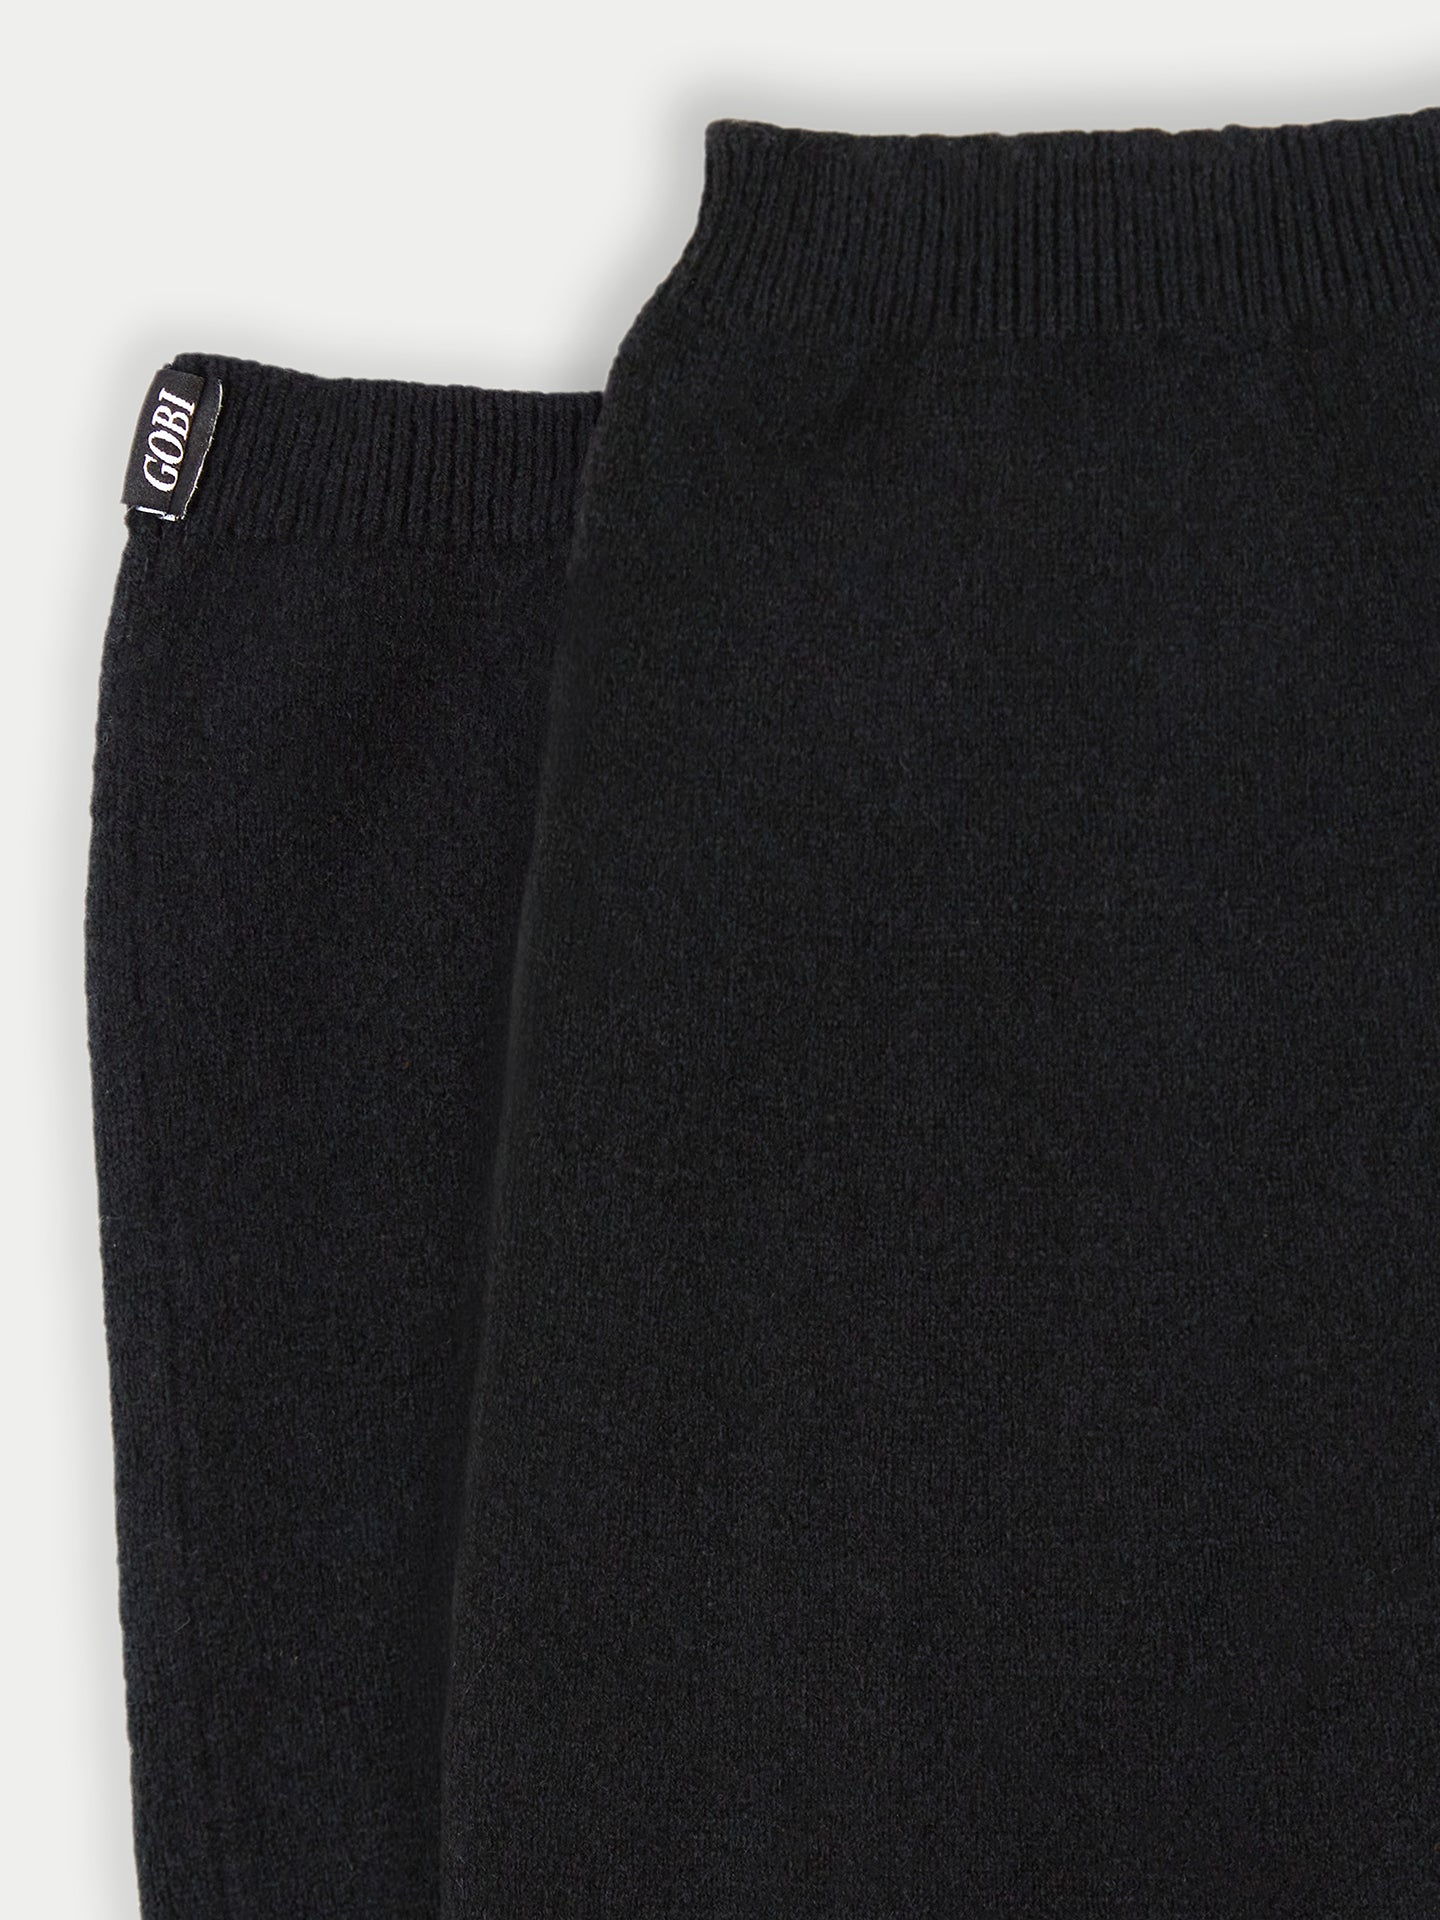 Women's Cashmere Knee Warmers Black - Gobi Cashmere